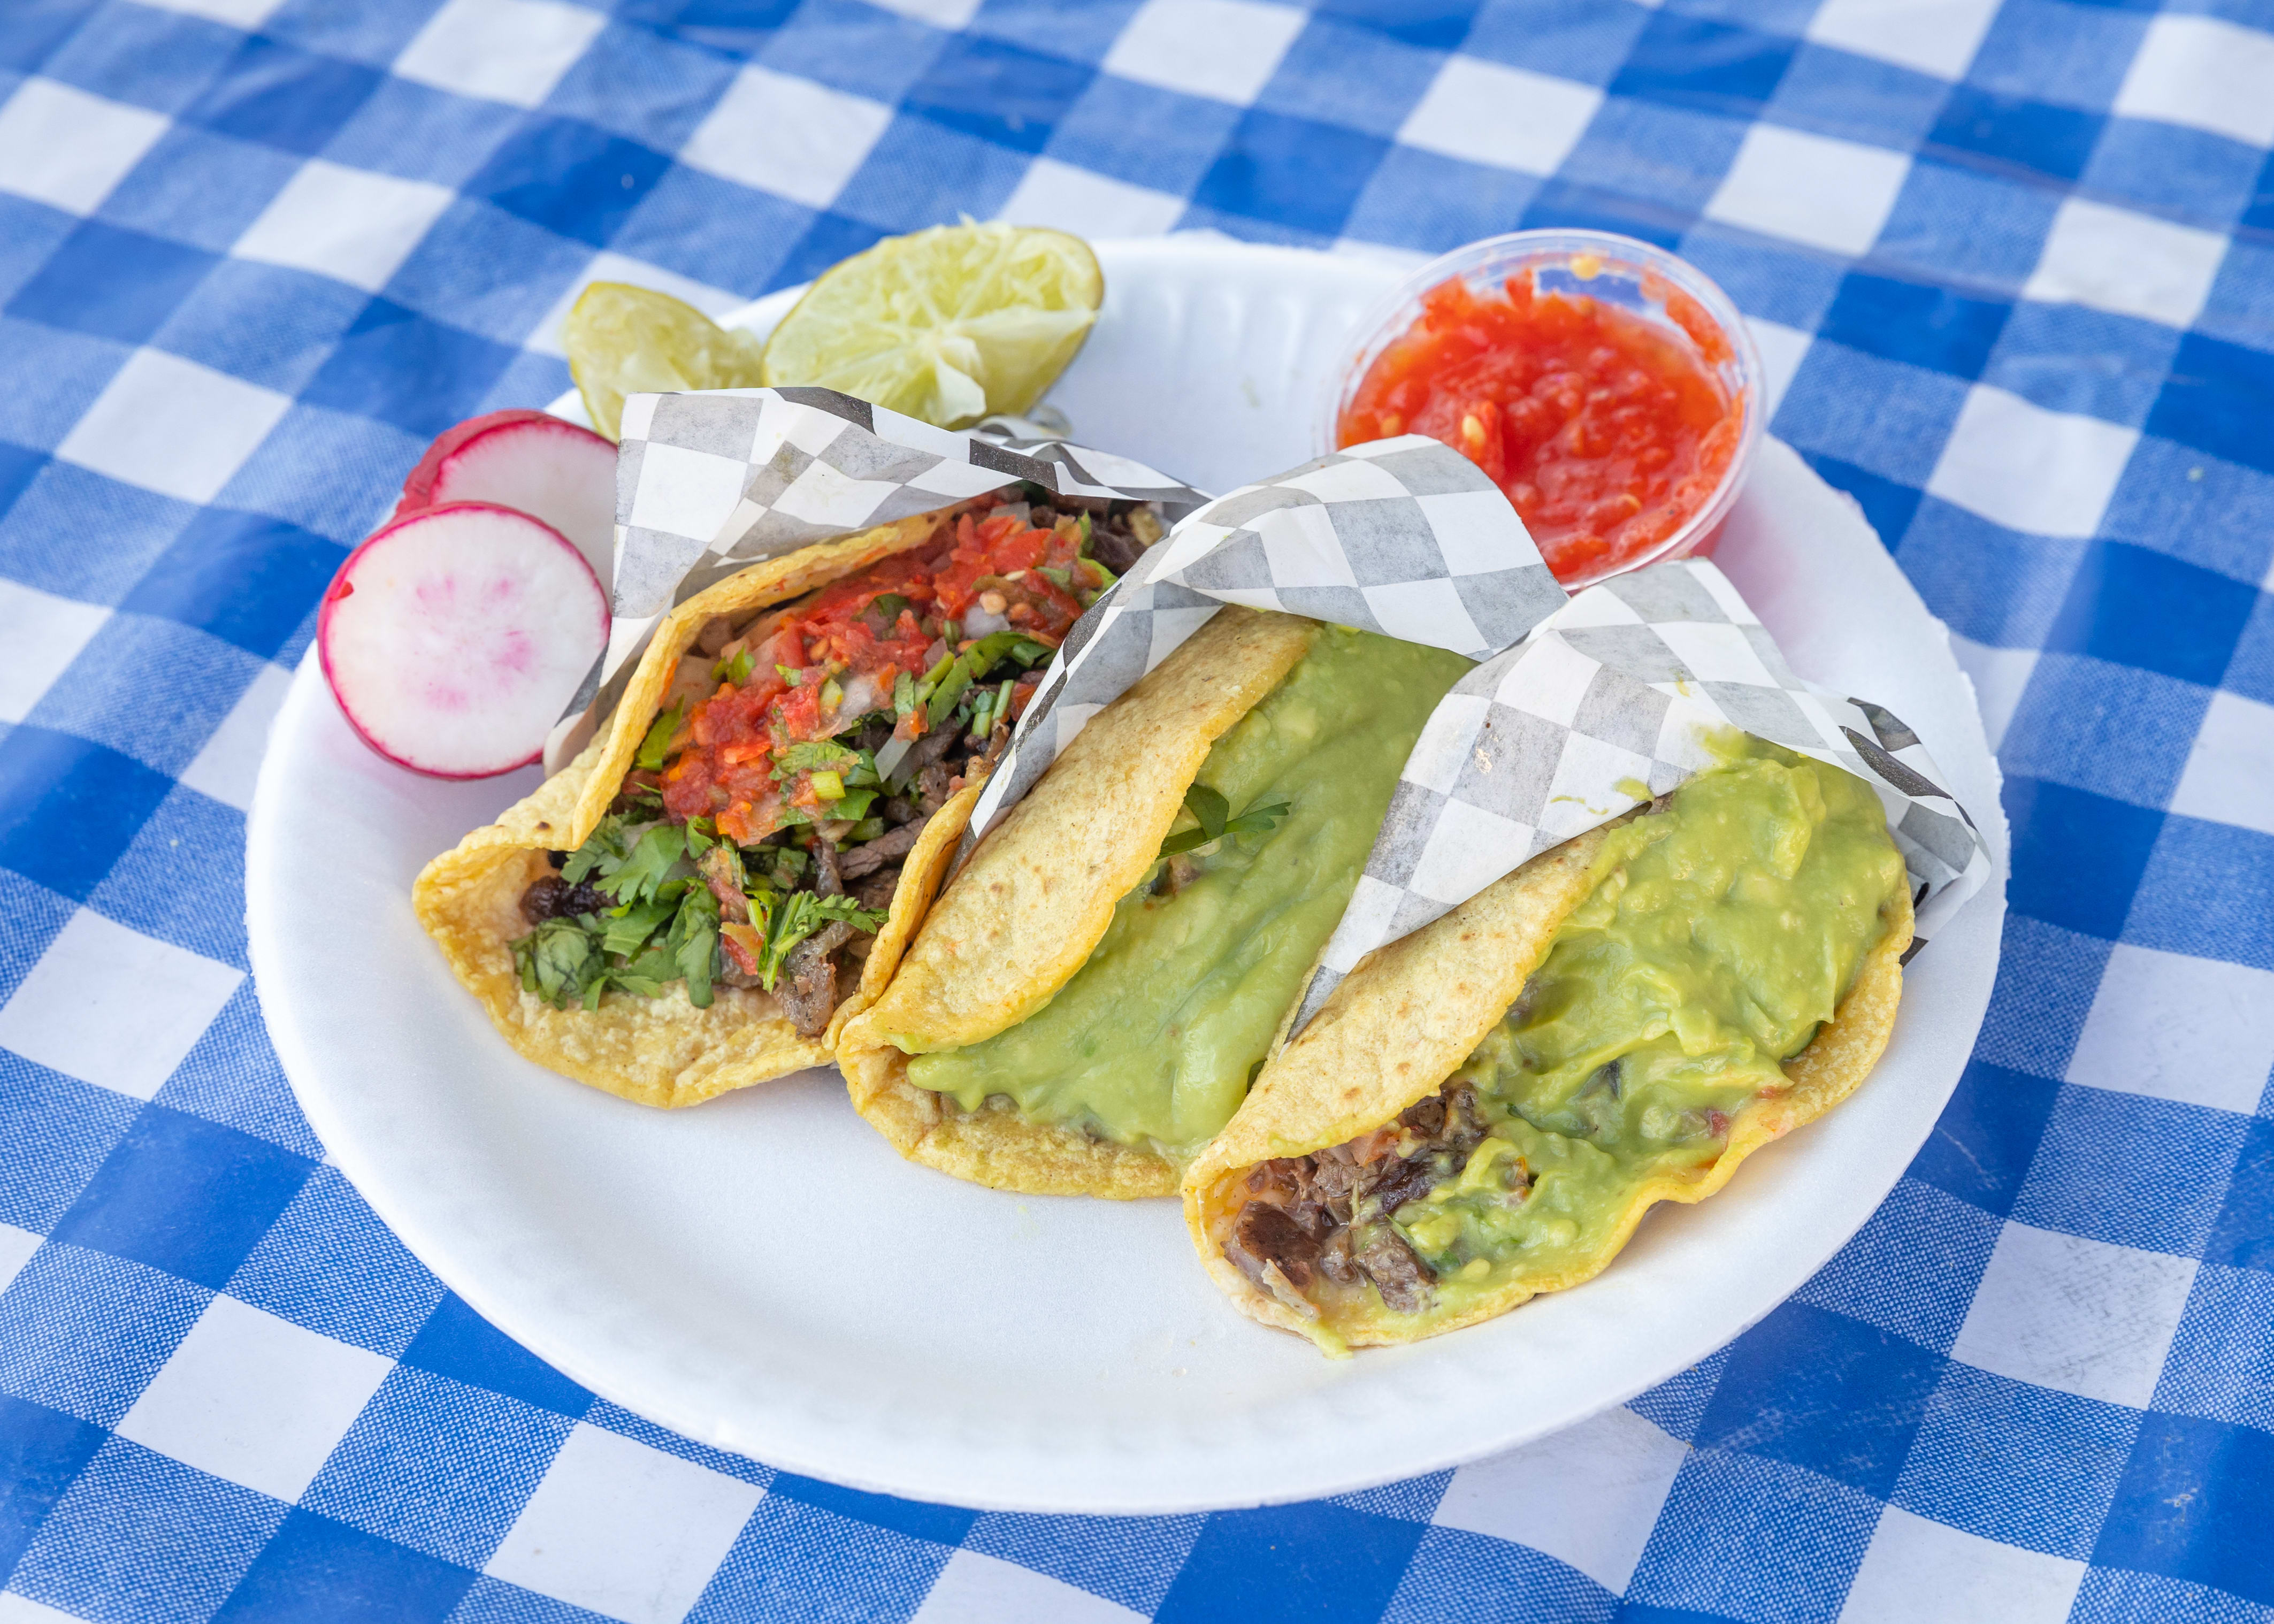 Tacos Los #1 South Los Angeles - Los Angeles - The Infatuation